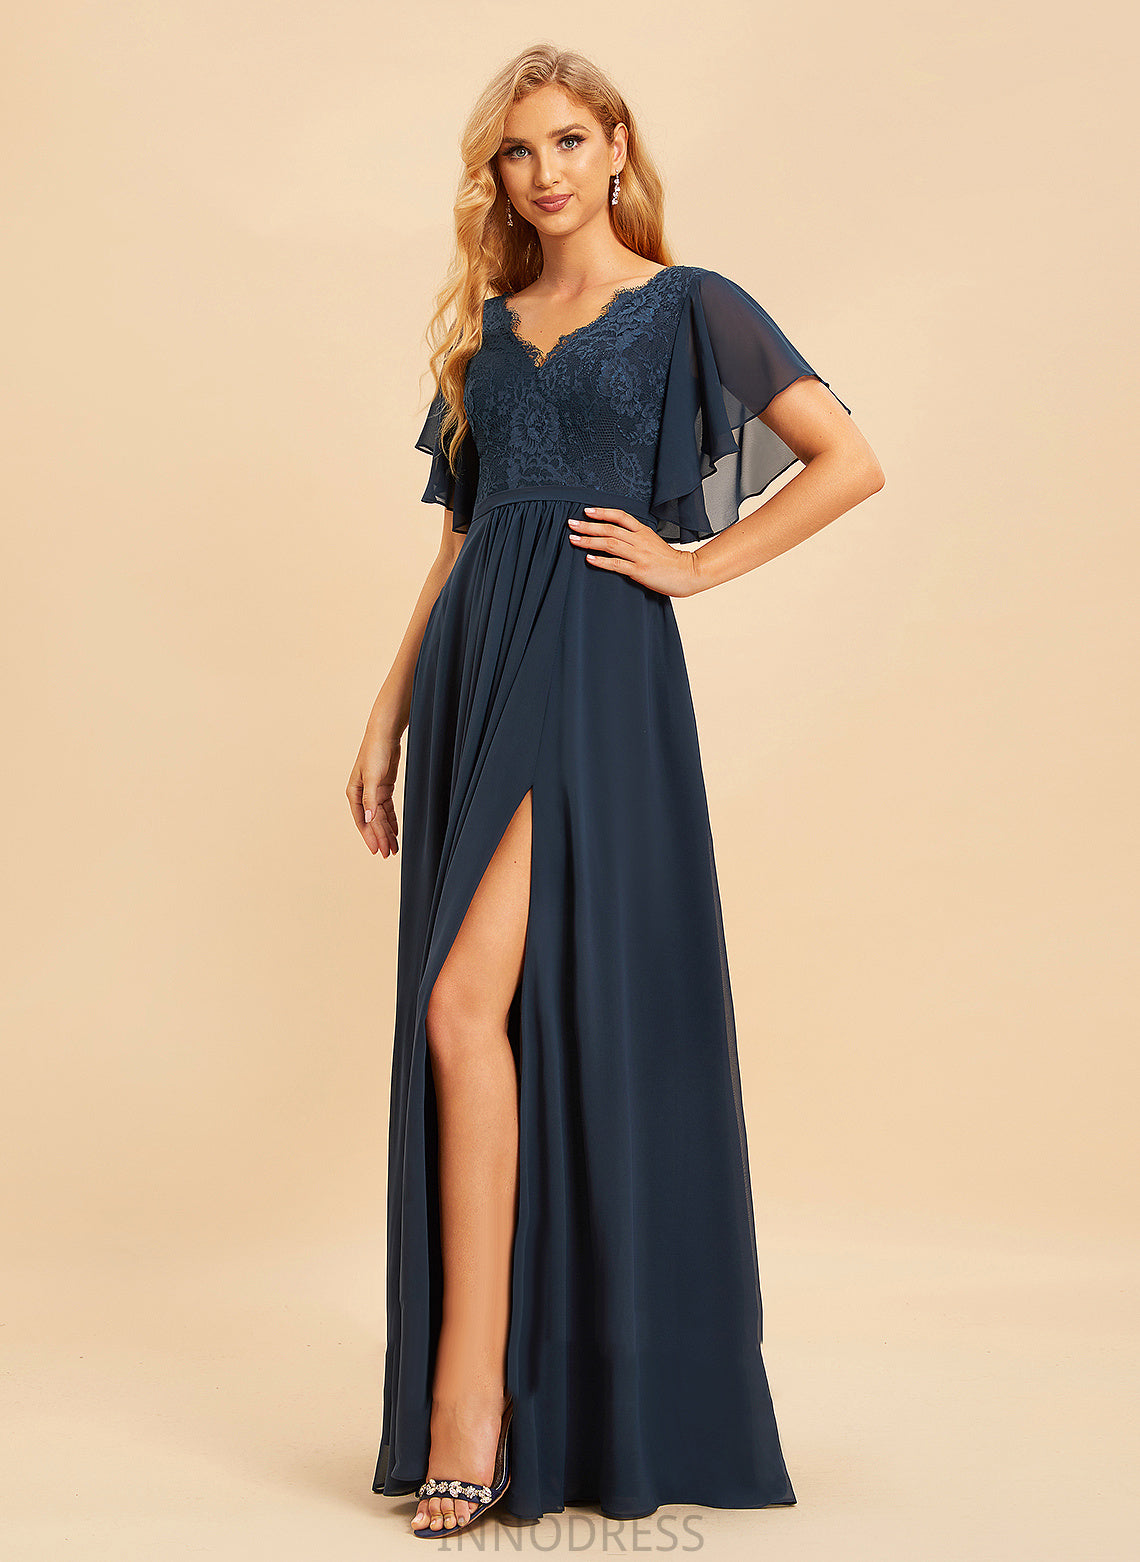 Silhouette Neckline Lace Floor-Length Fabric A-Line V-neck Length Embellishment SplitFront Courtney Natural Waist Bridesmaid Dresses